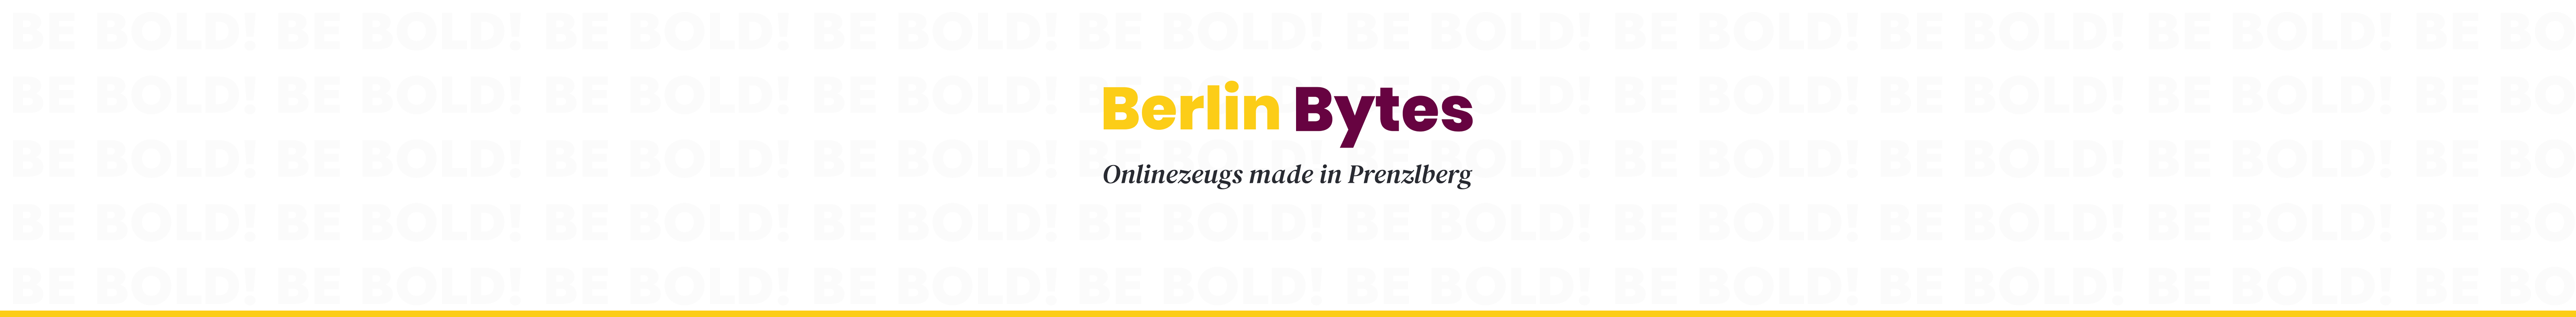 Berlin Bytes's profile banner